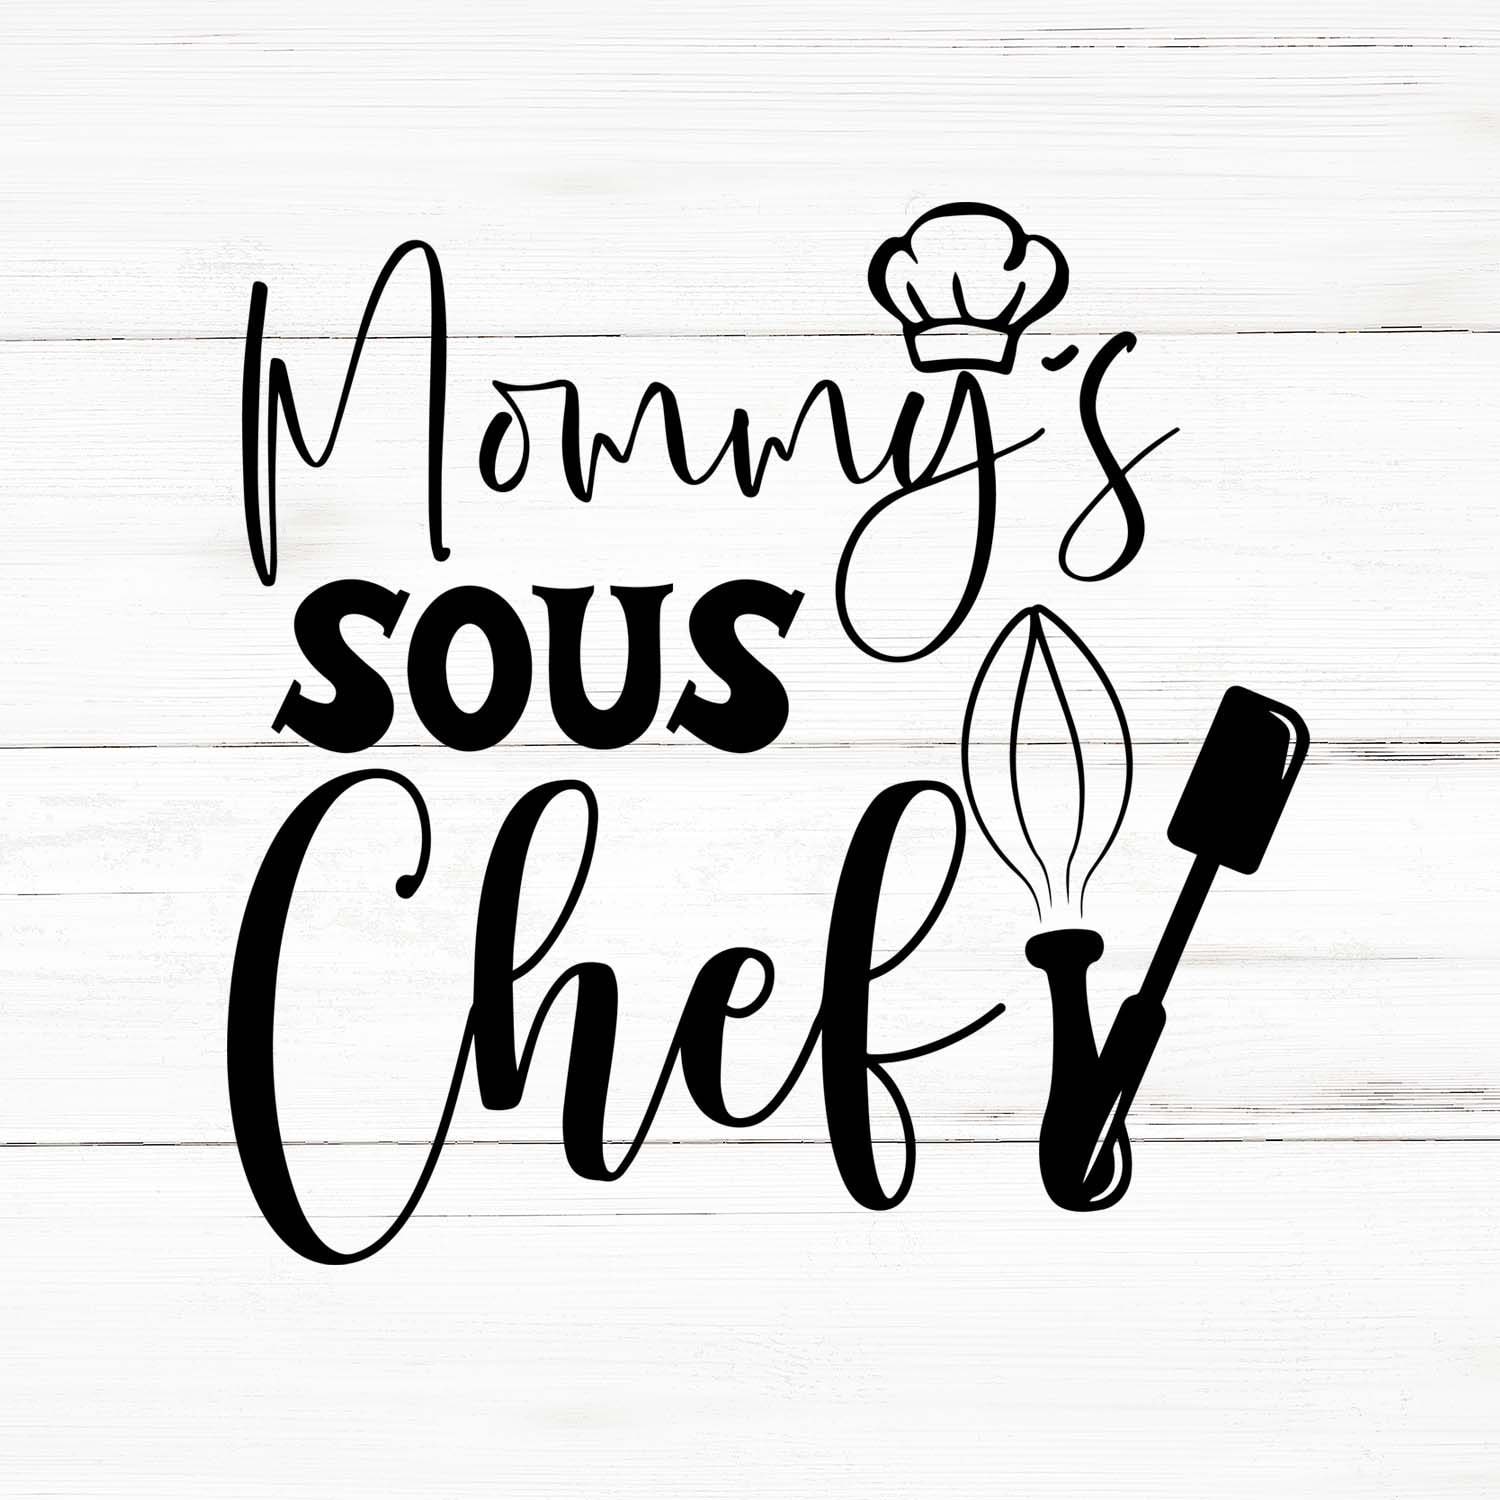 Amazing Chef MOM / Embroidered Apron – Sasasco